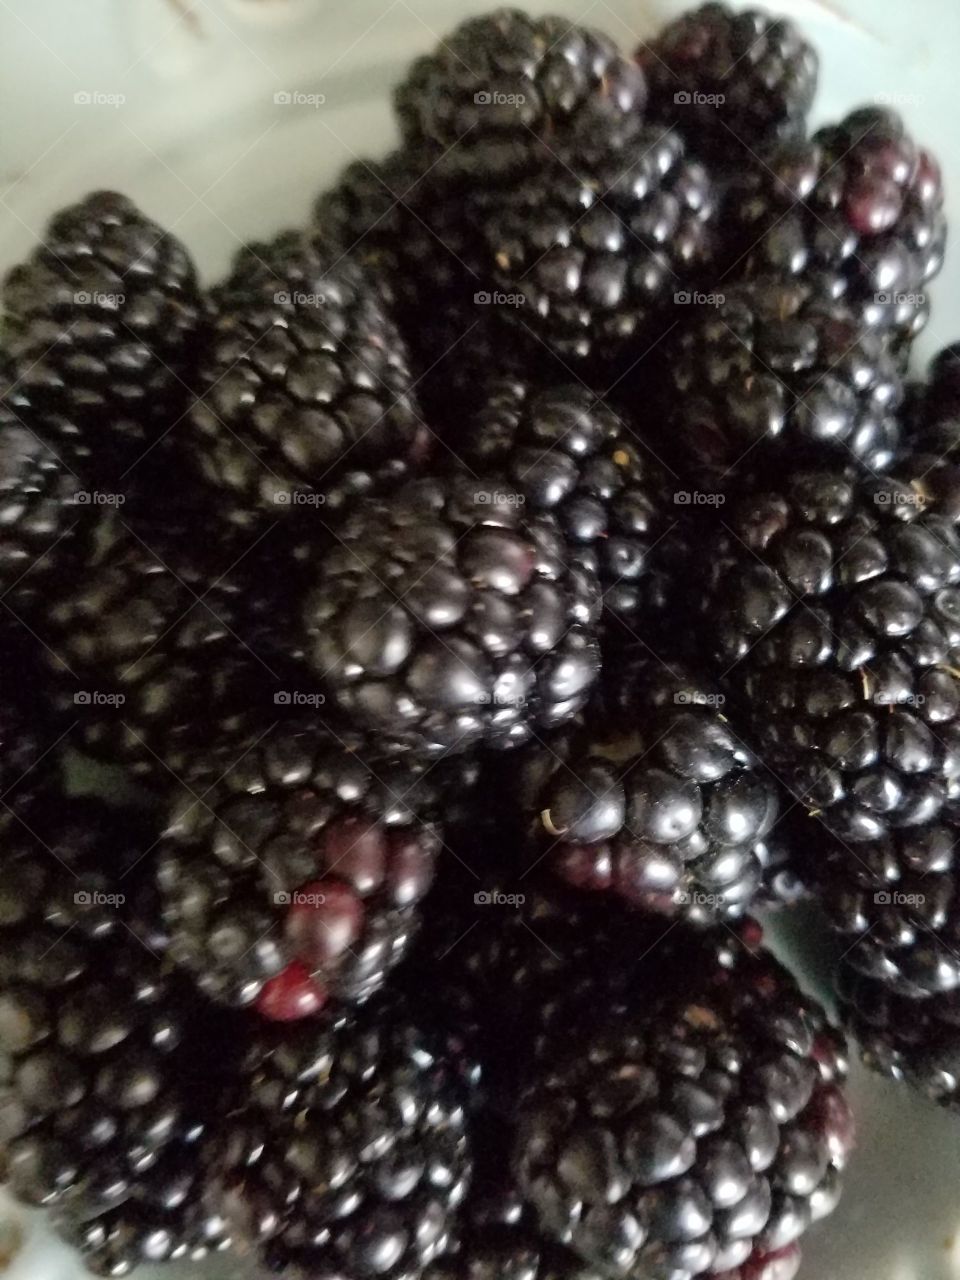 blackberries, fresh healthy close up